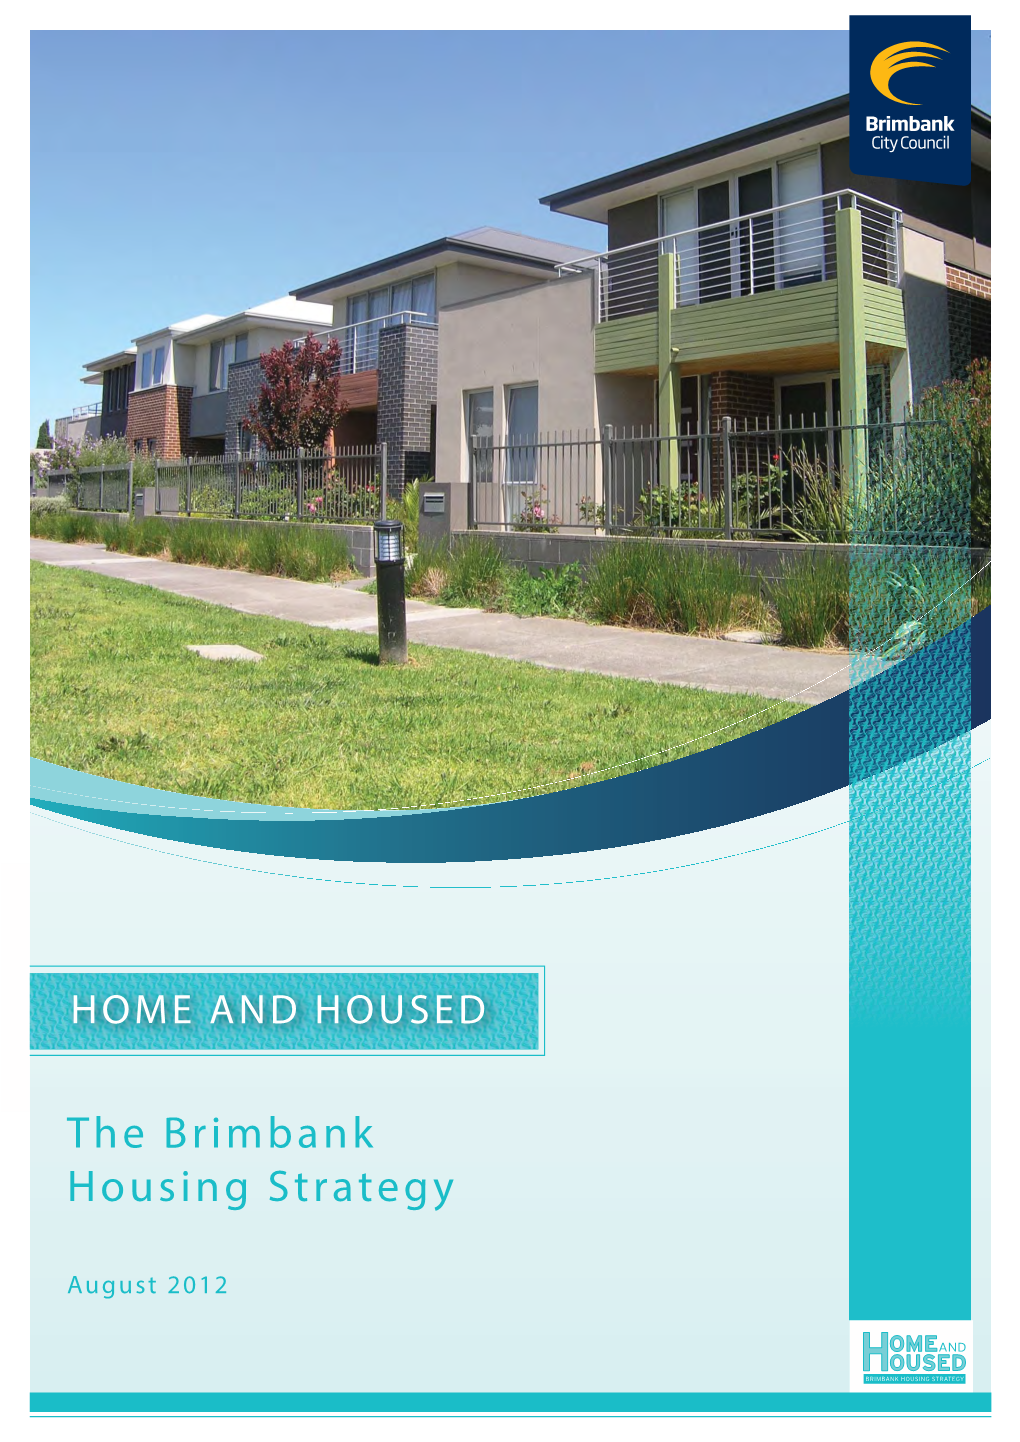 The Brimbank Housing Strategy